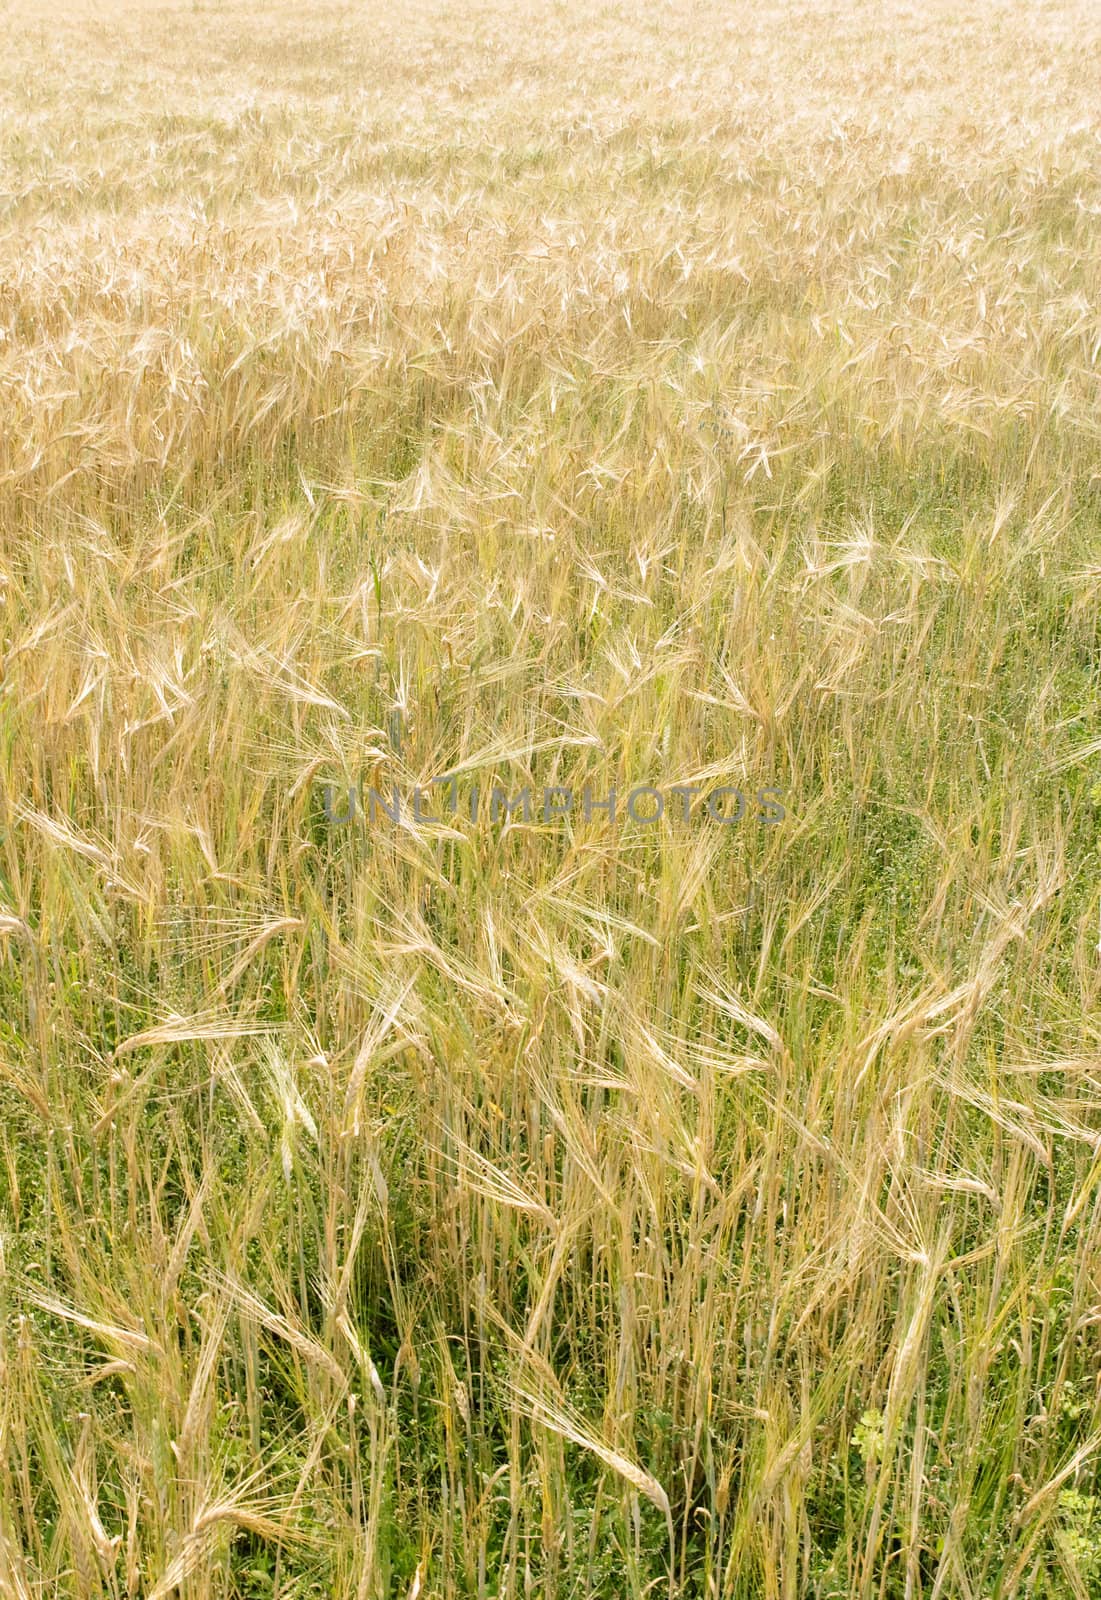 A golden wheat field background